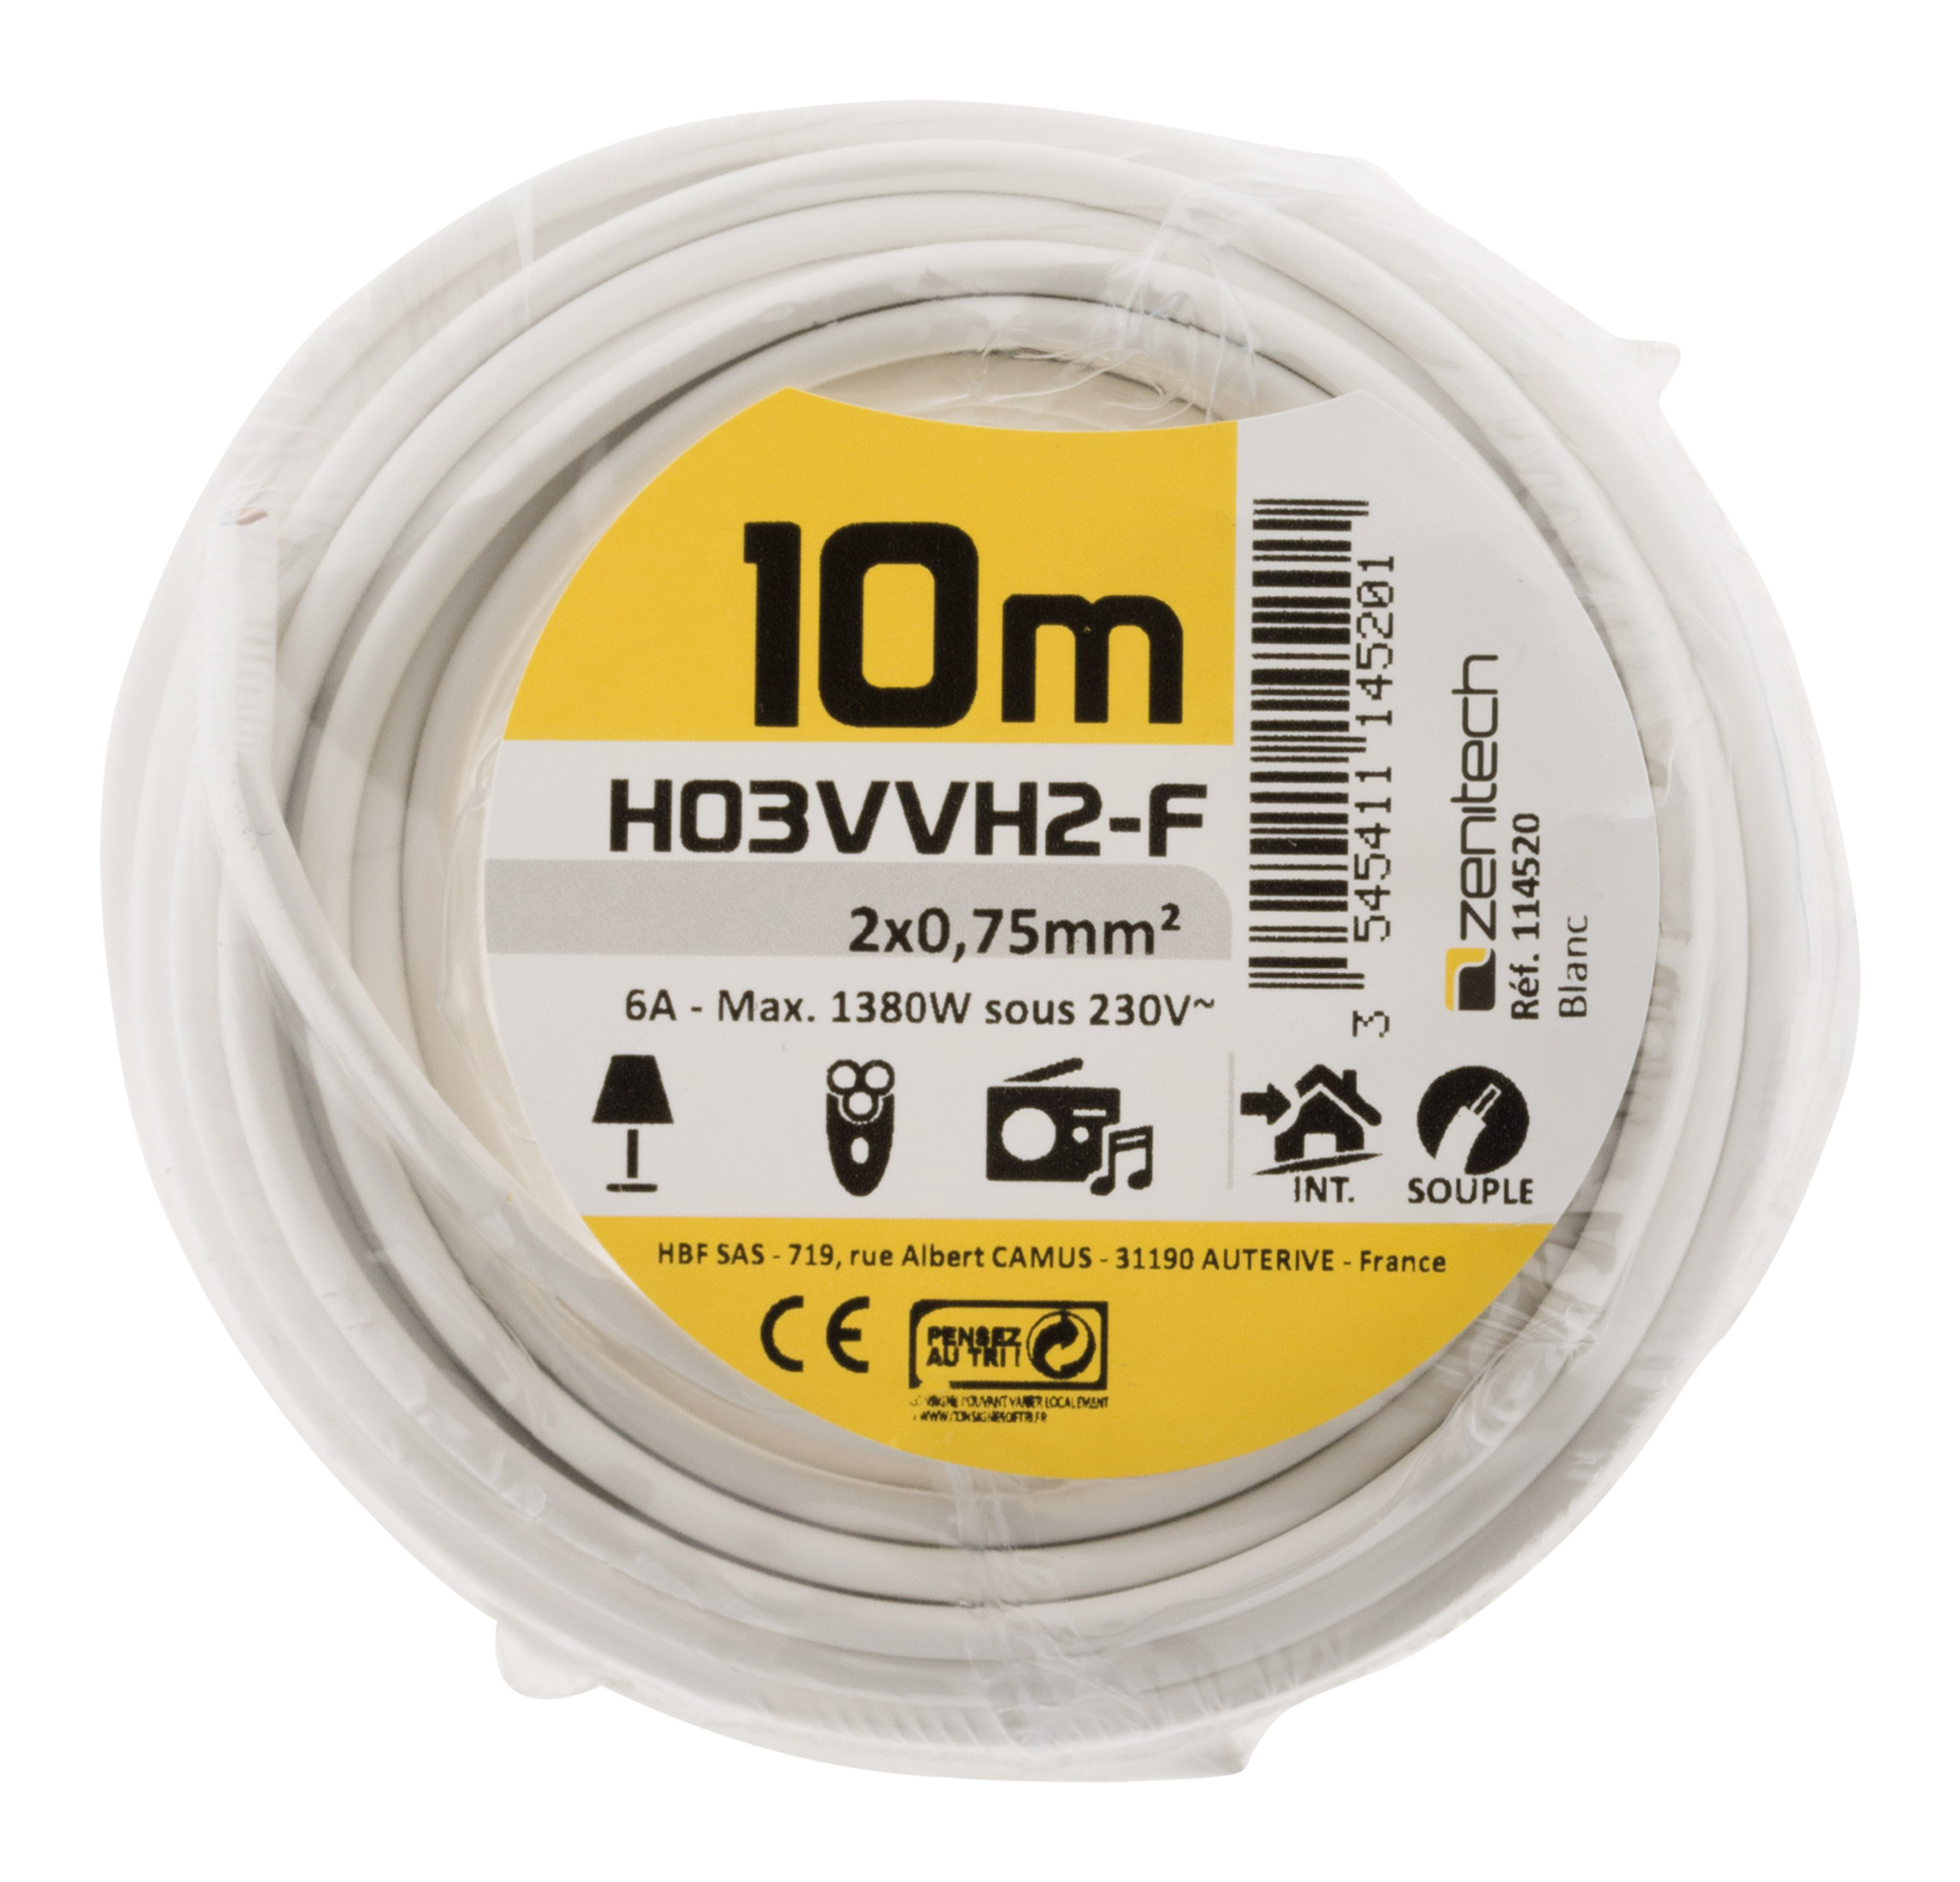 Cable ho3vvh-2f 2x0.75 blanc 10m - INOTECH